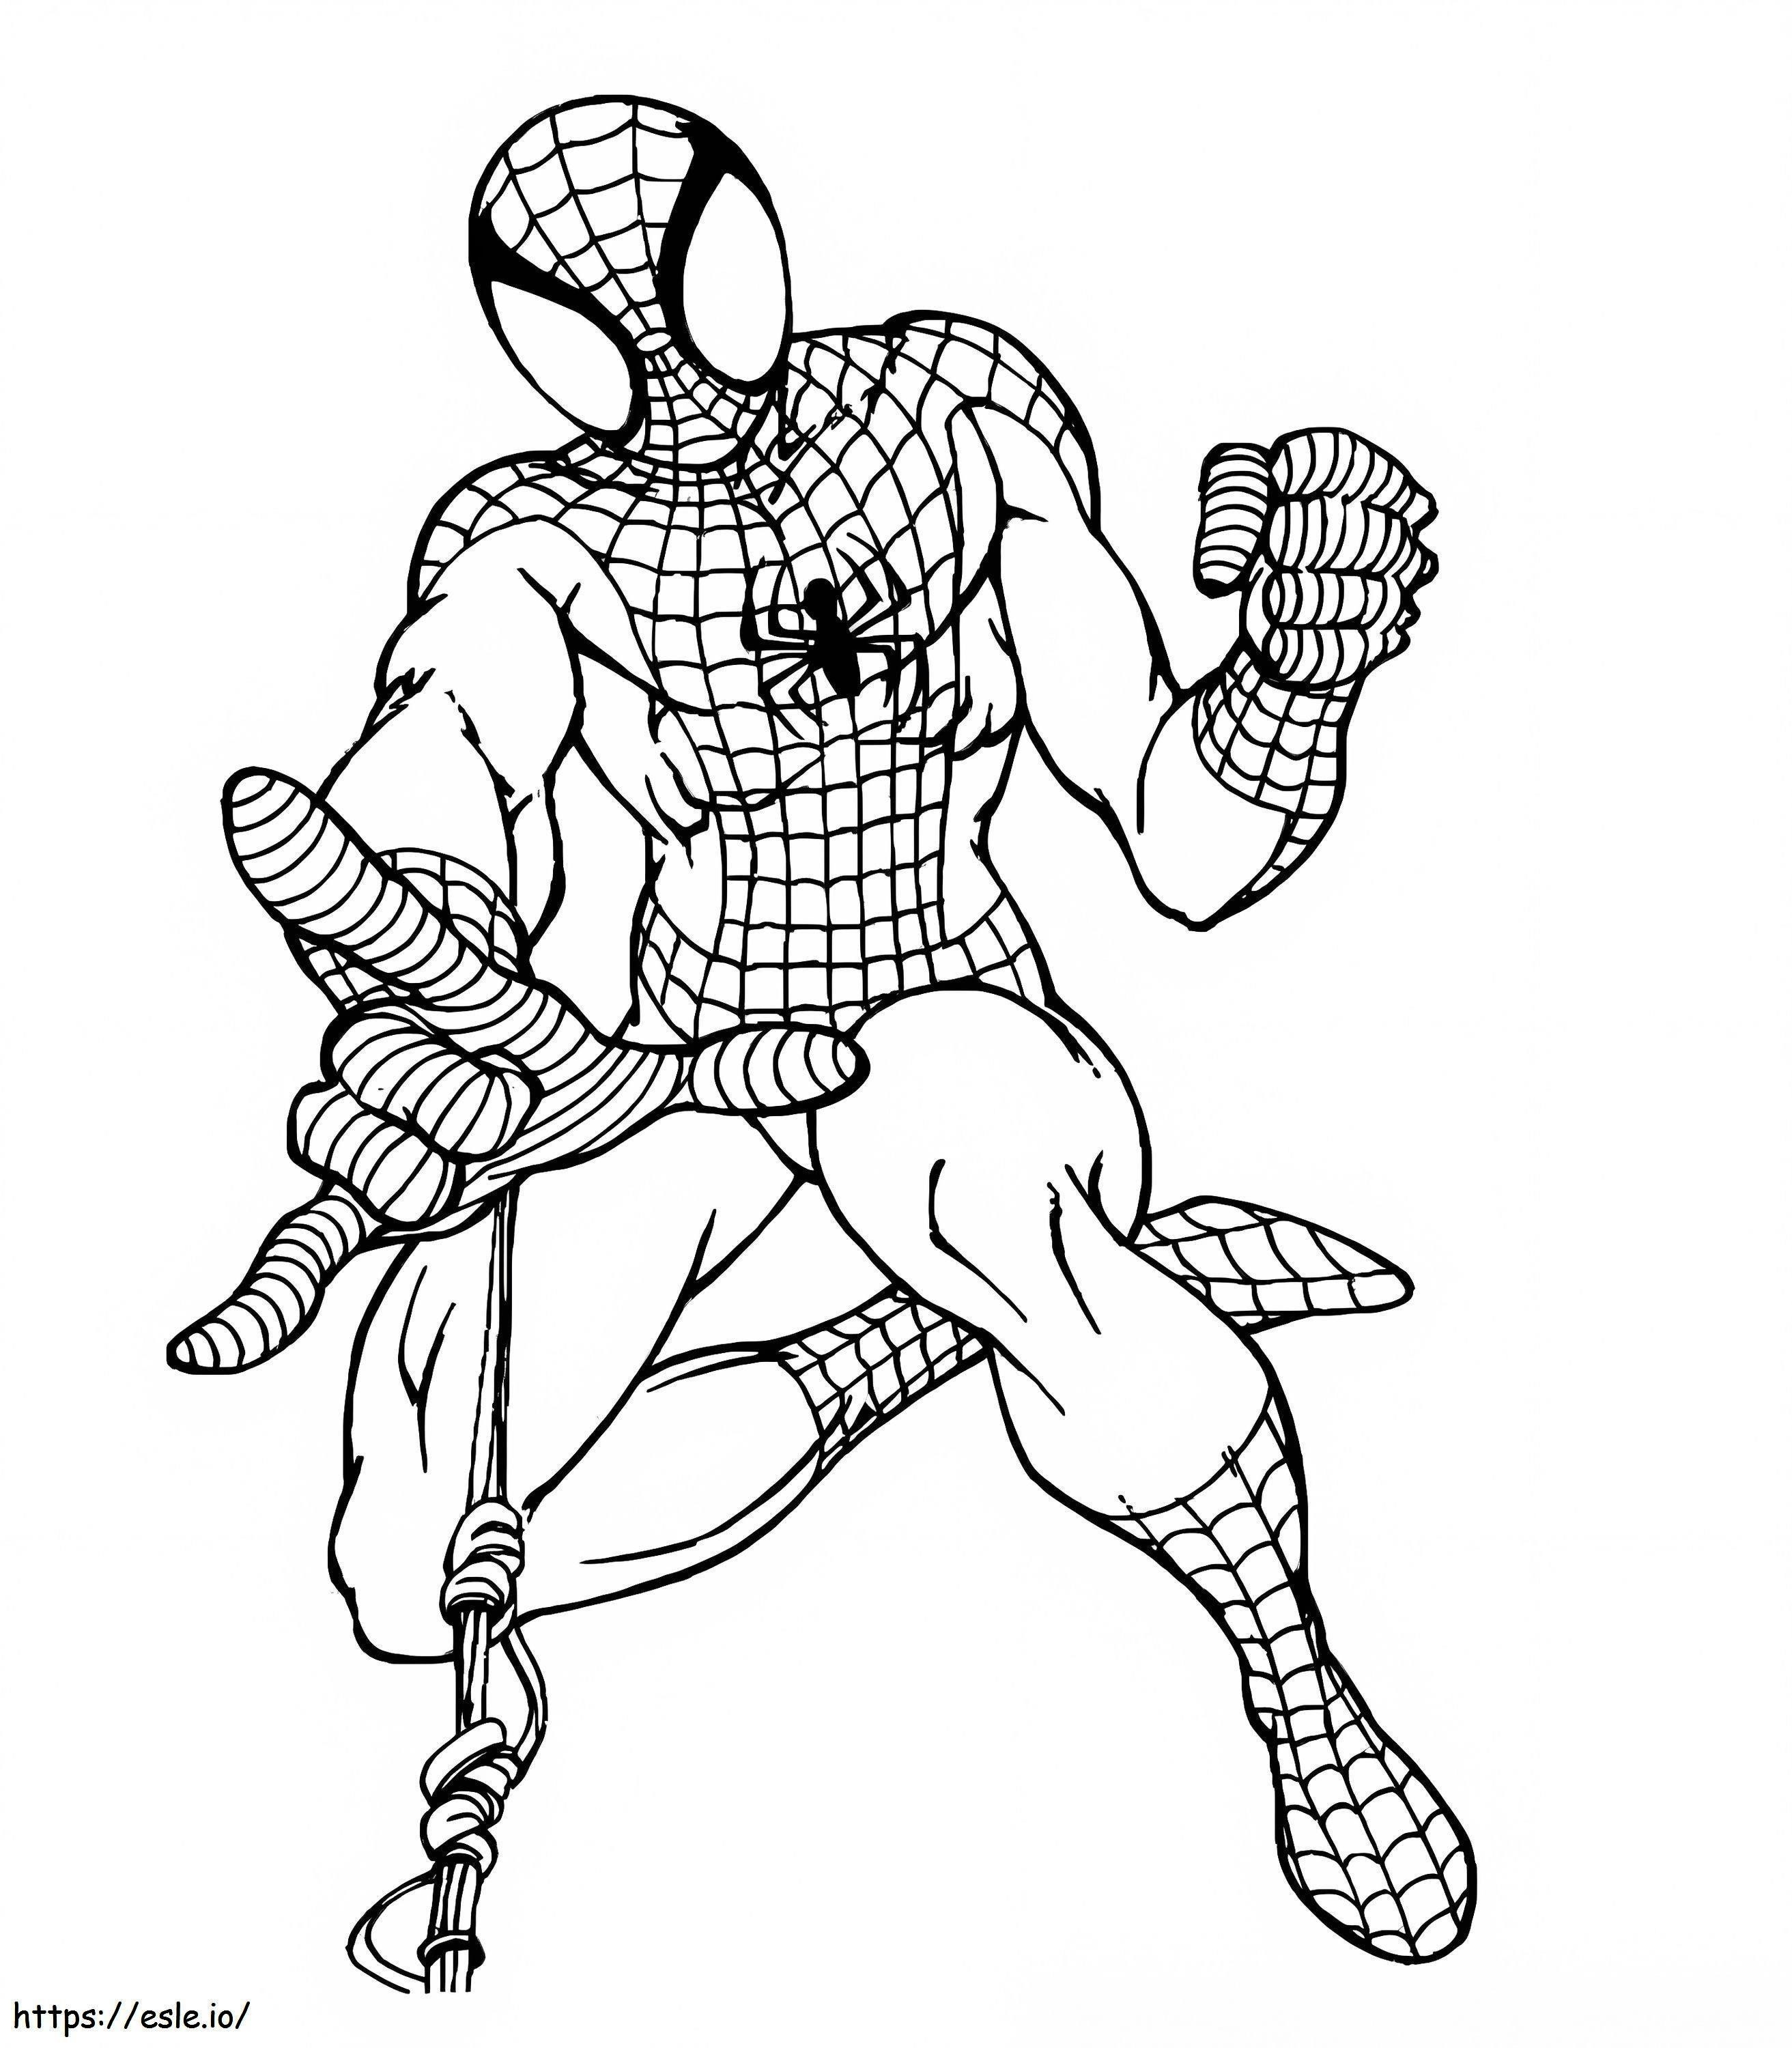 Coloriage Dessin Simple De Spider Man à imprimer dessin